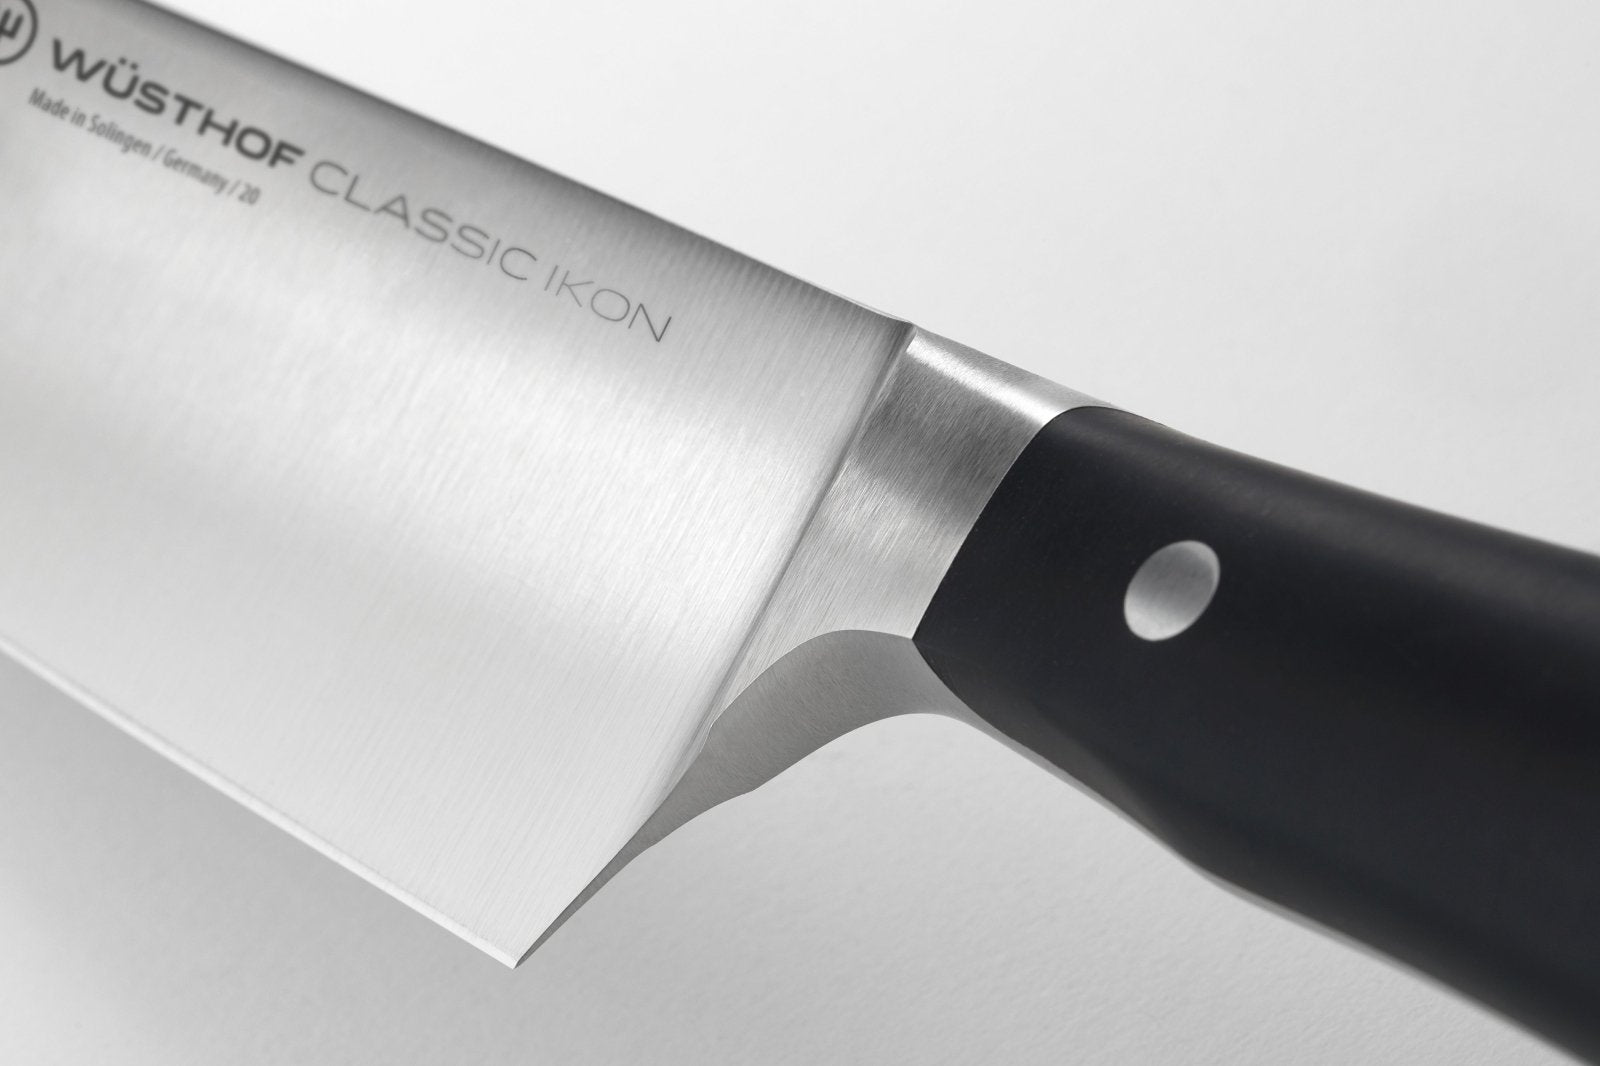 Wusthof Classic IKON 23cm Bread Knife - WT1040331023 - The Cotswold Knife Company